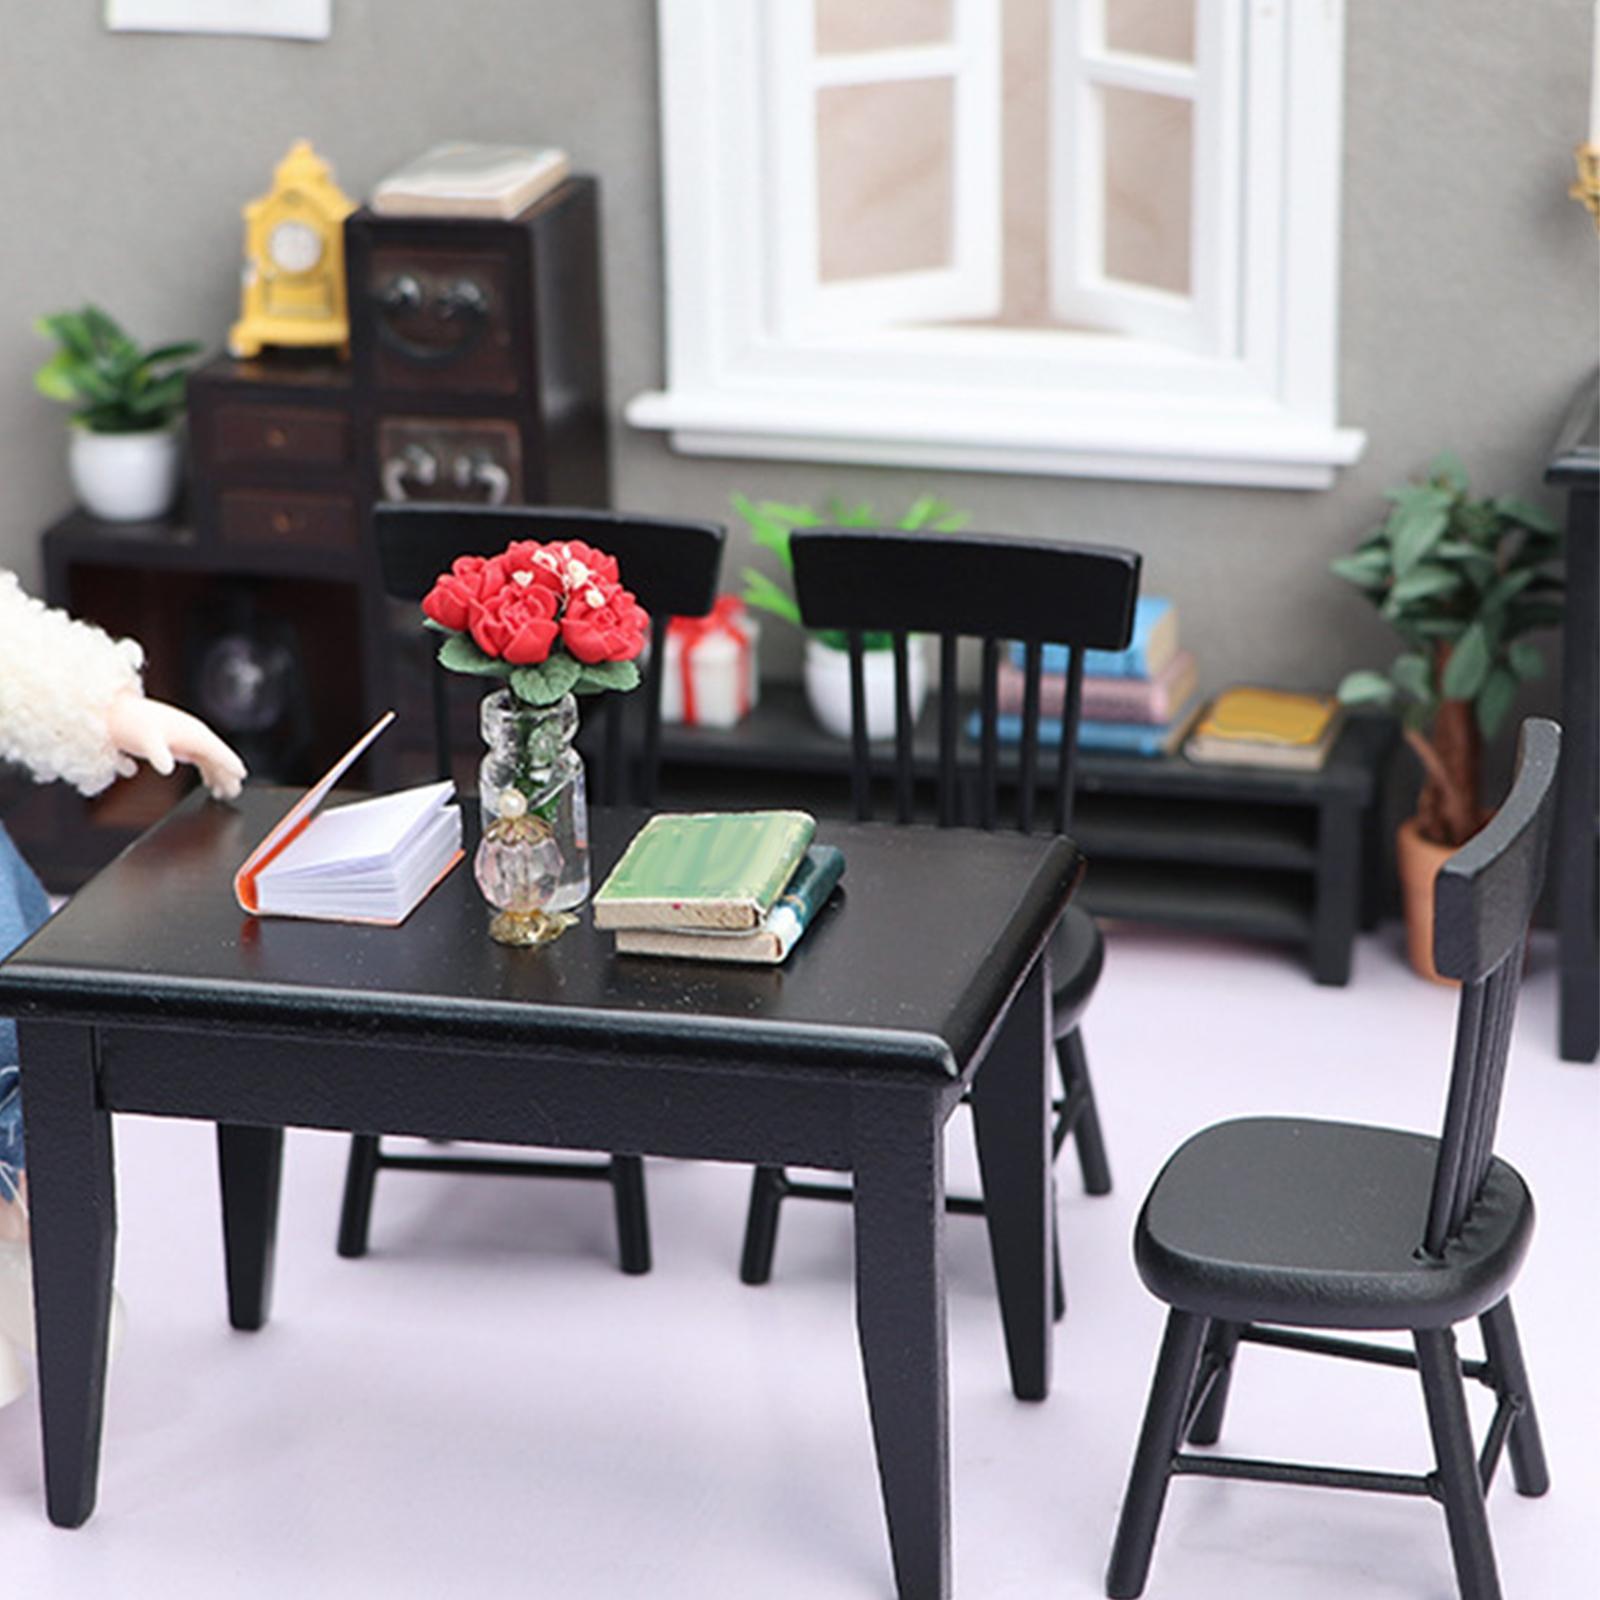 Simulation Dollhouse Miniature Table Chairs  Furniture